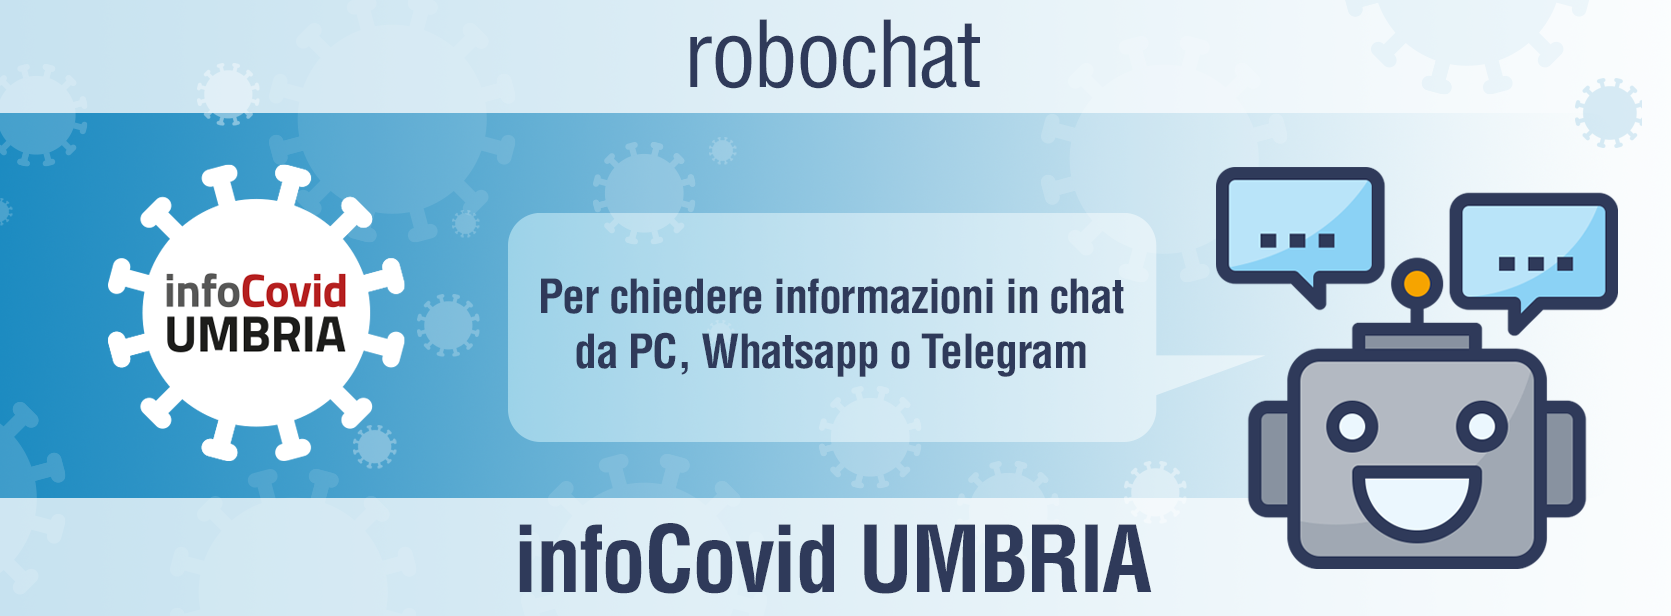 Robochat Info-Covid Umbria